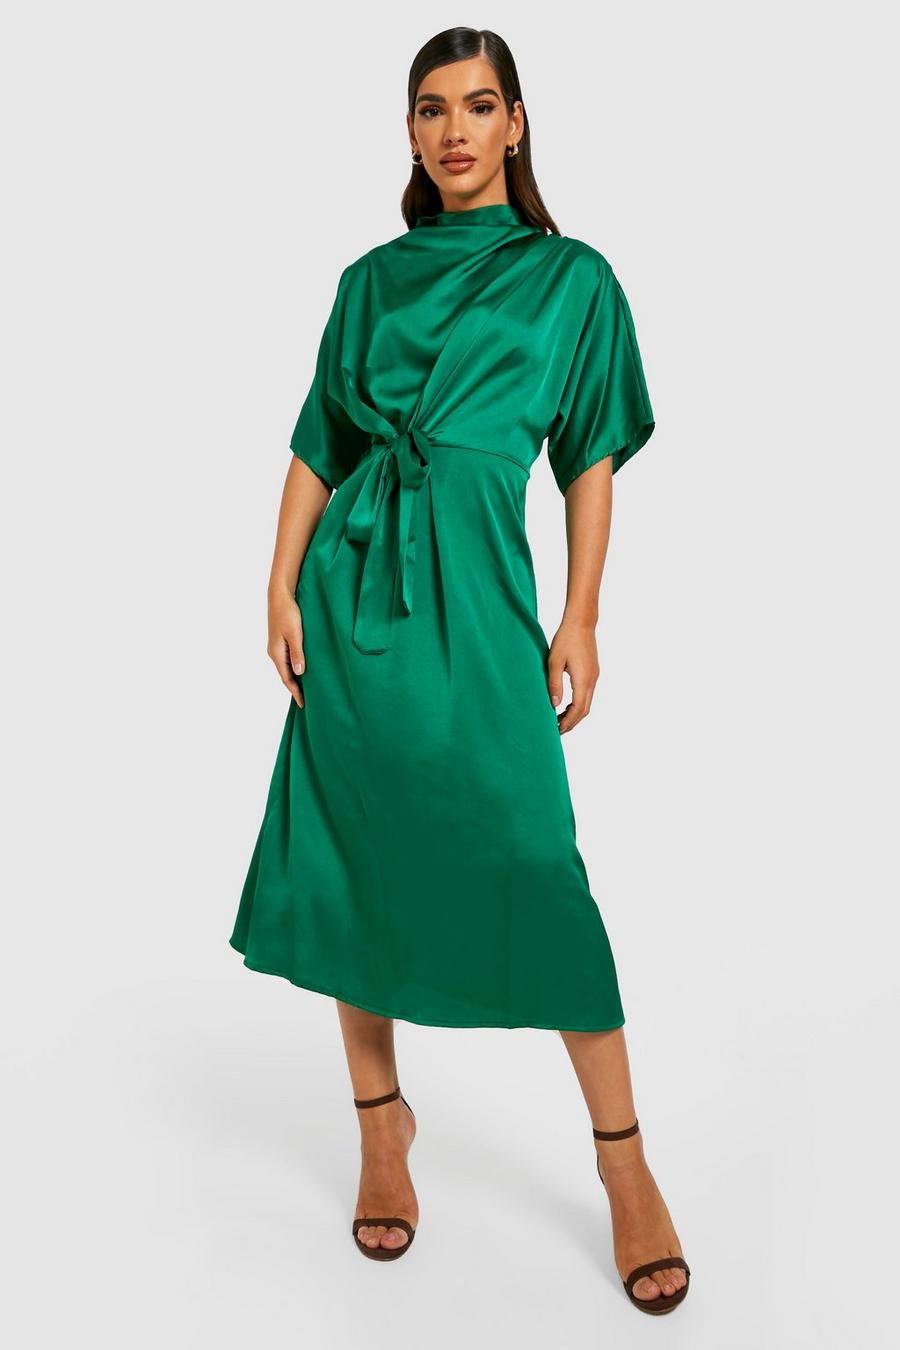 Emerald green Satin Knot Front Cowl Neck Midi Dress